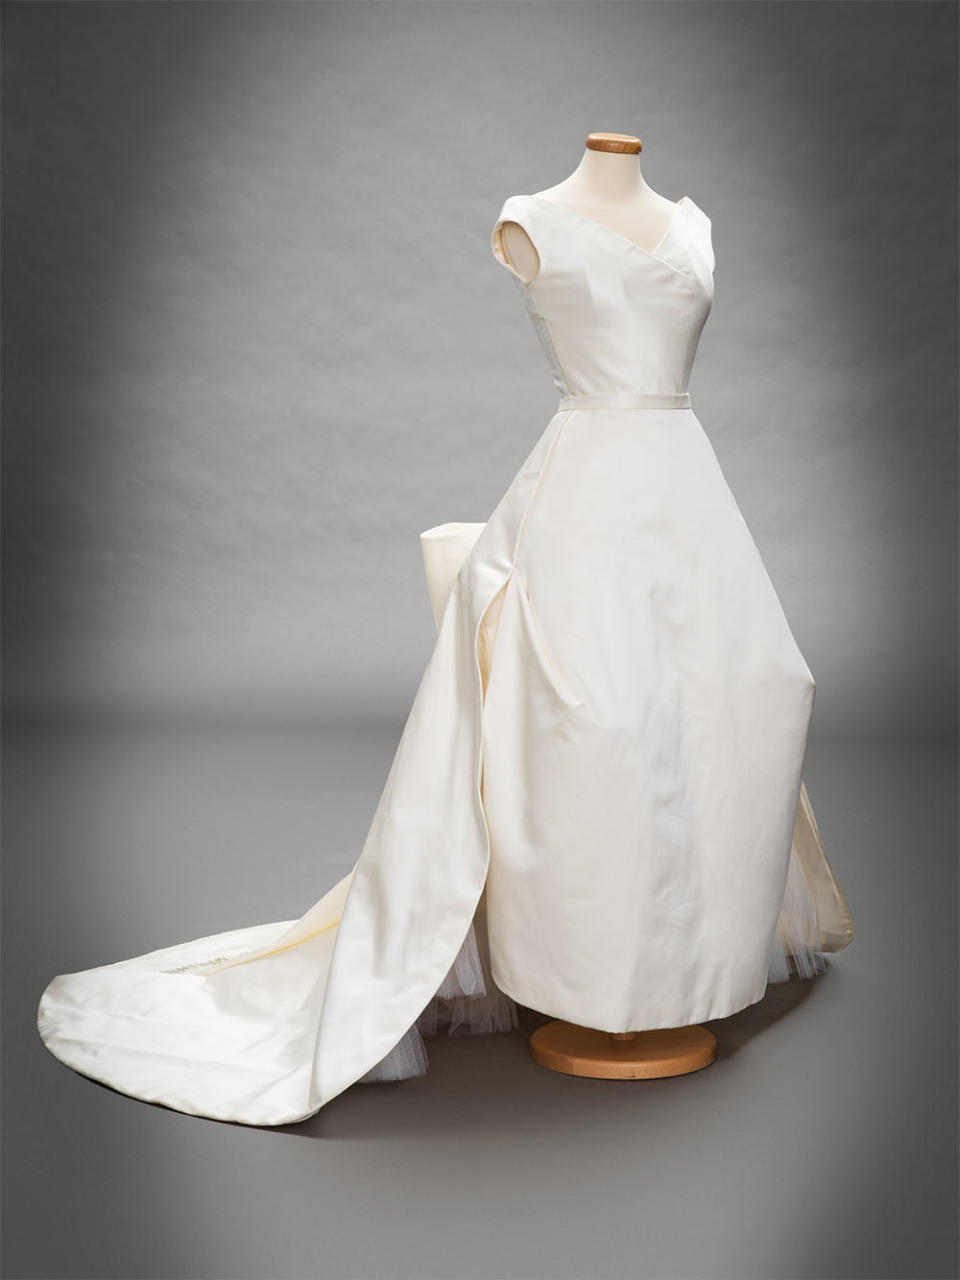 A 1957 white finale bridal gown - Credit: David Lukacs/2021 Ada Films Ltd - Harris Squared Kft